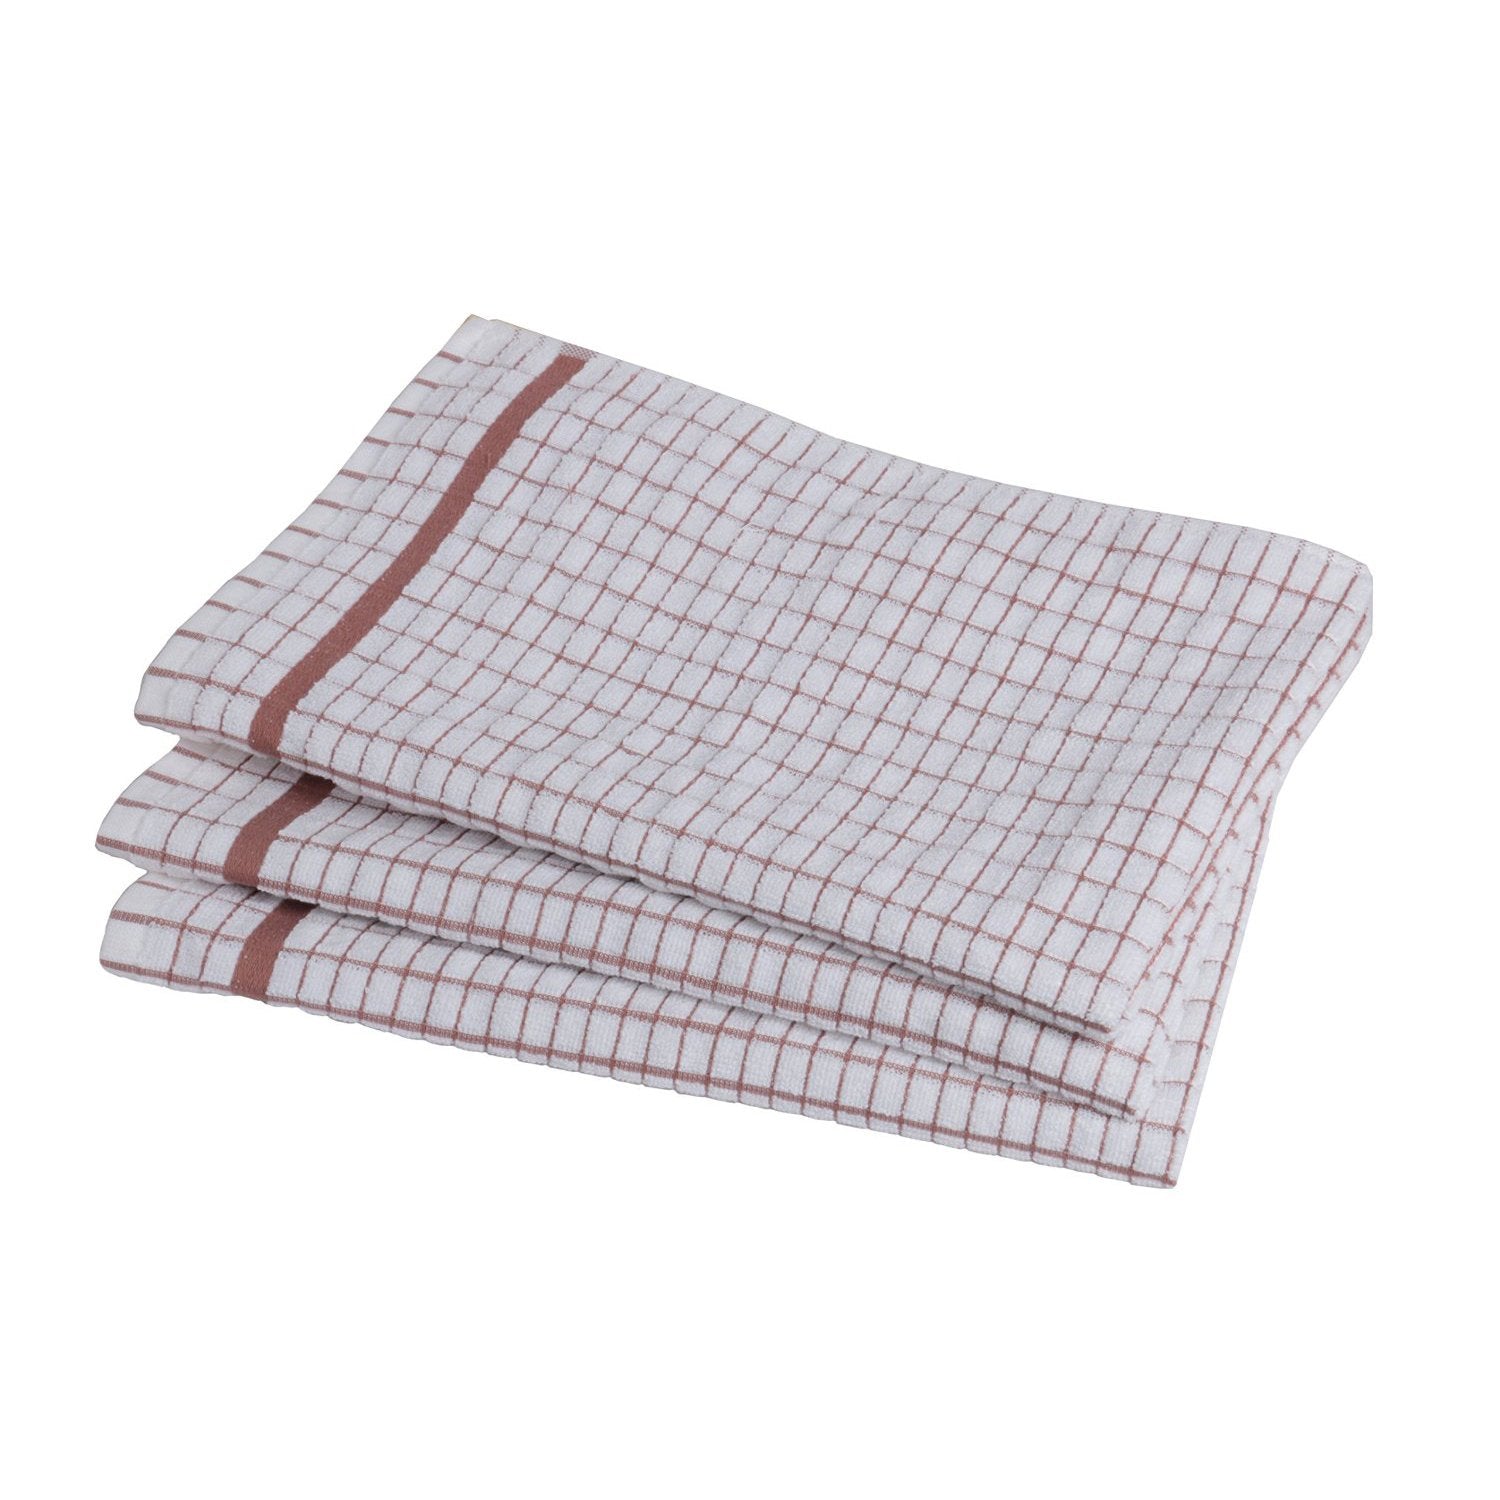 European Art Checkered Design Cotton Dish Towels